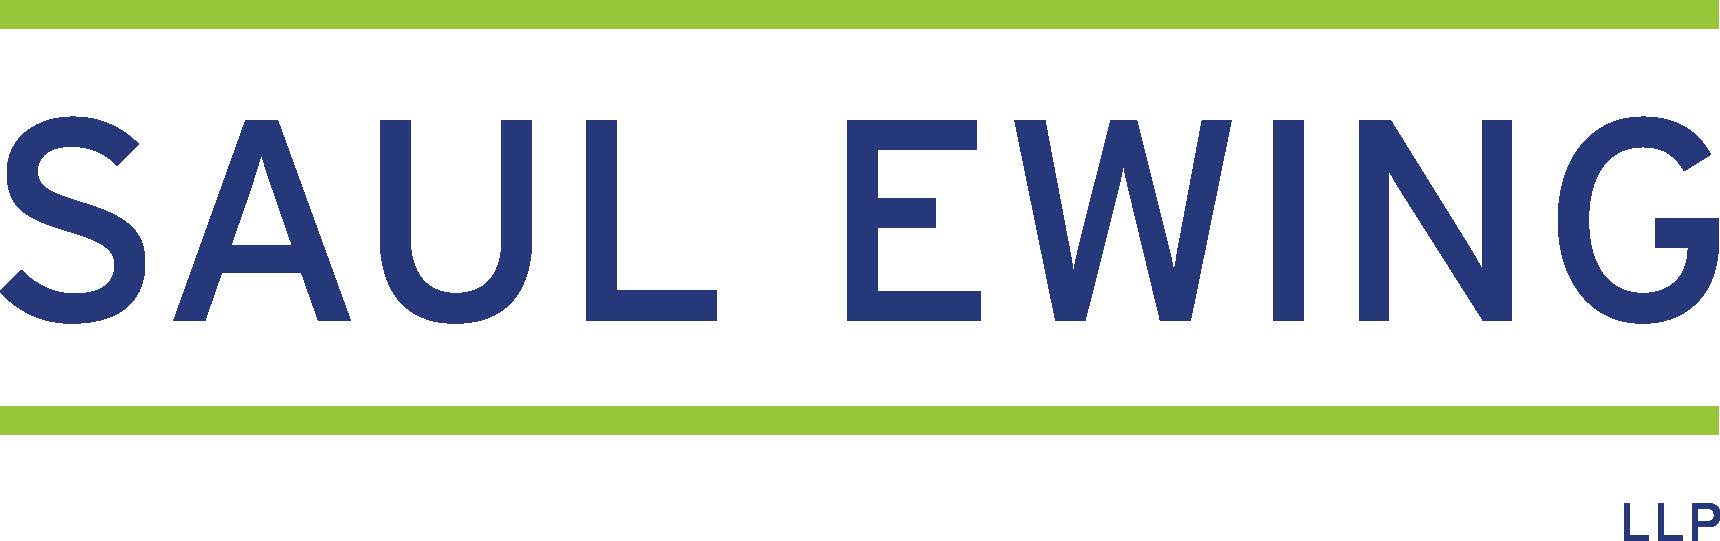 Saul Ewing LLC logo